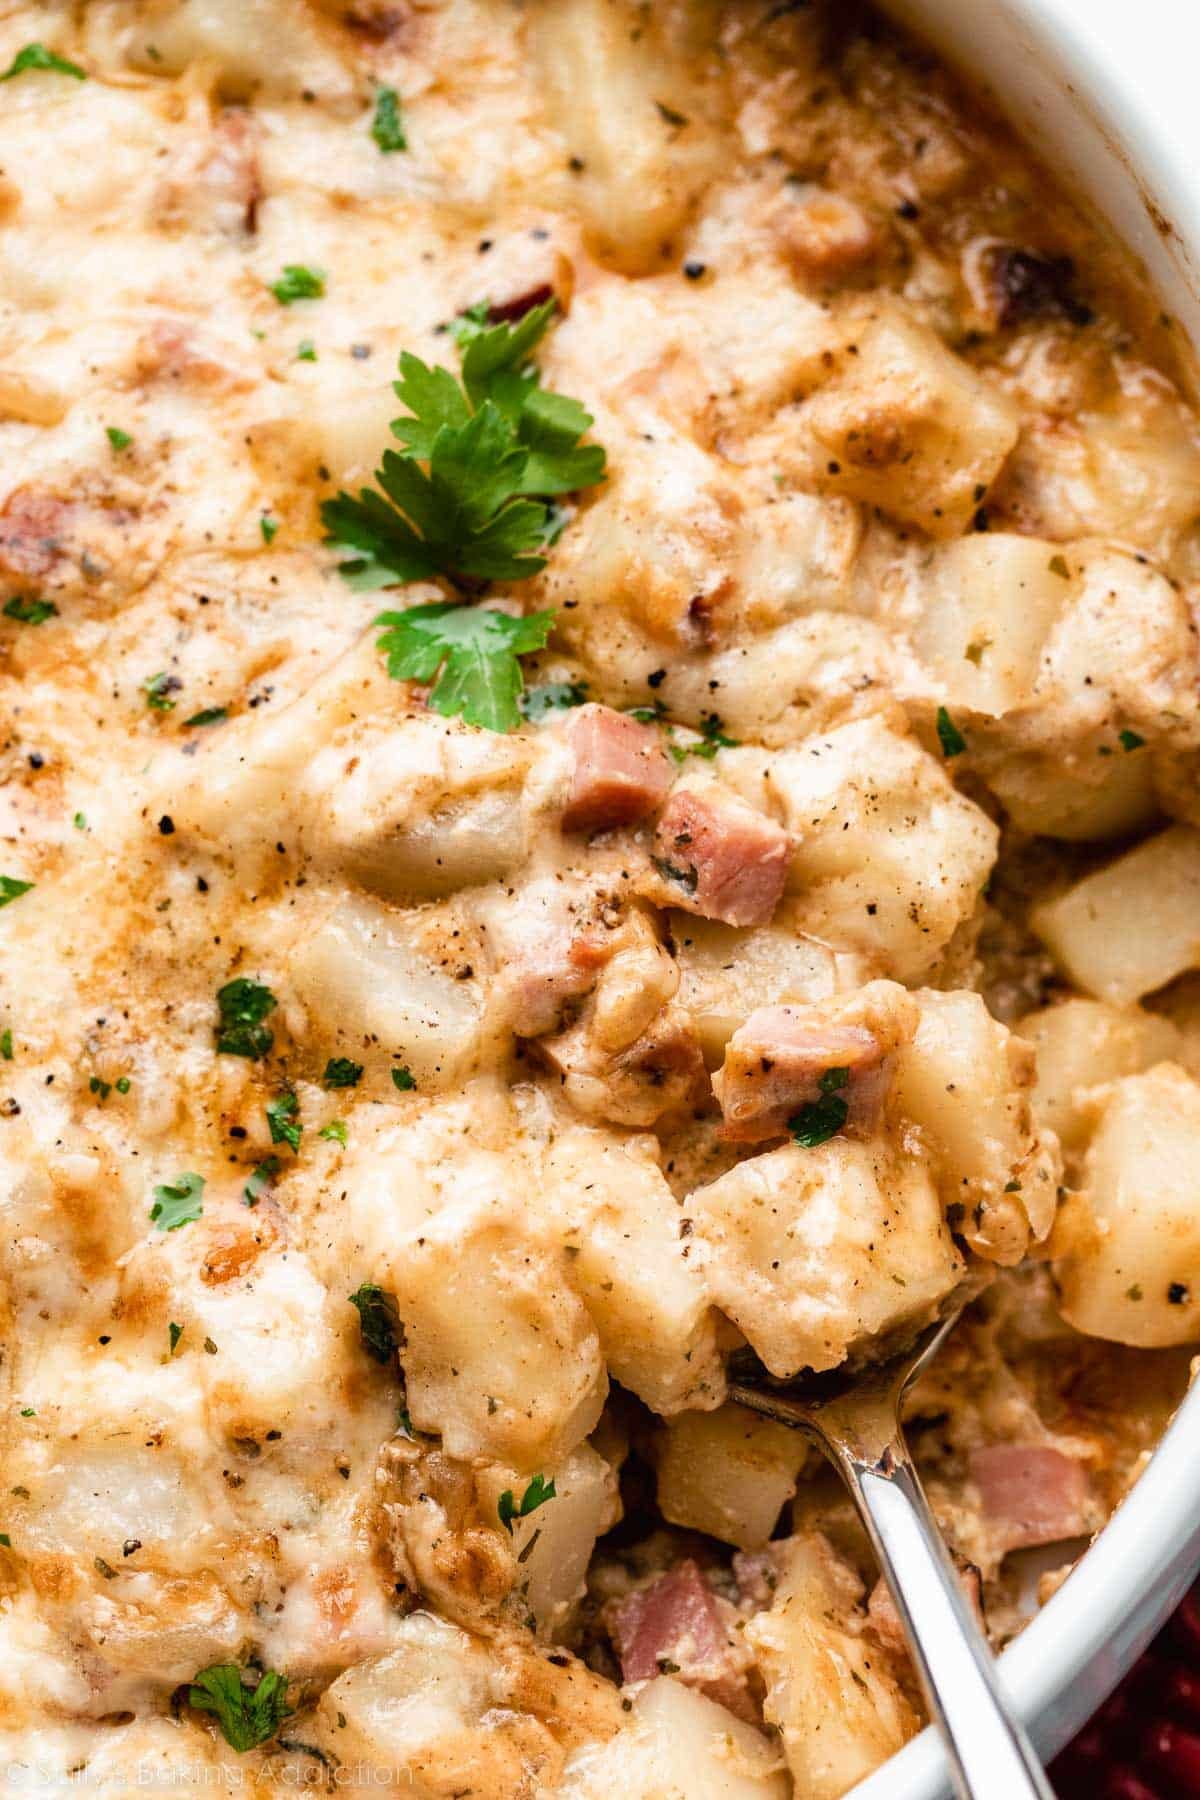 Baked Potato Casserole: A Versatile and Nutritious Comfort Food Recipe